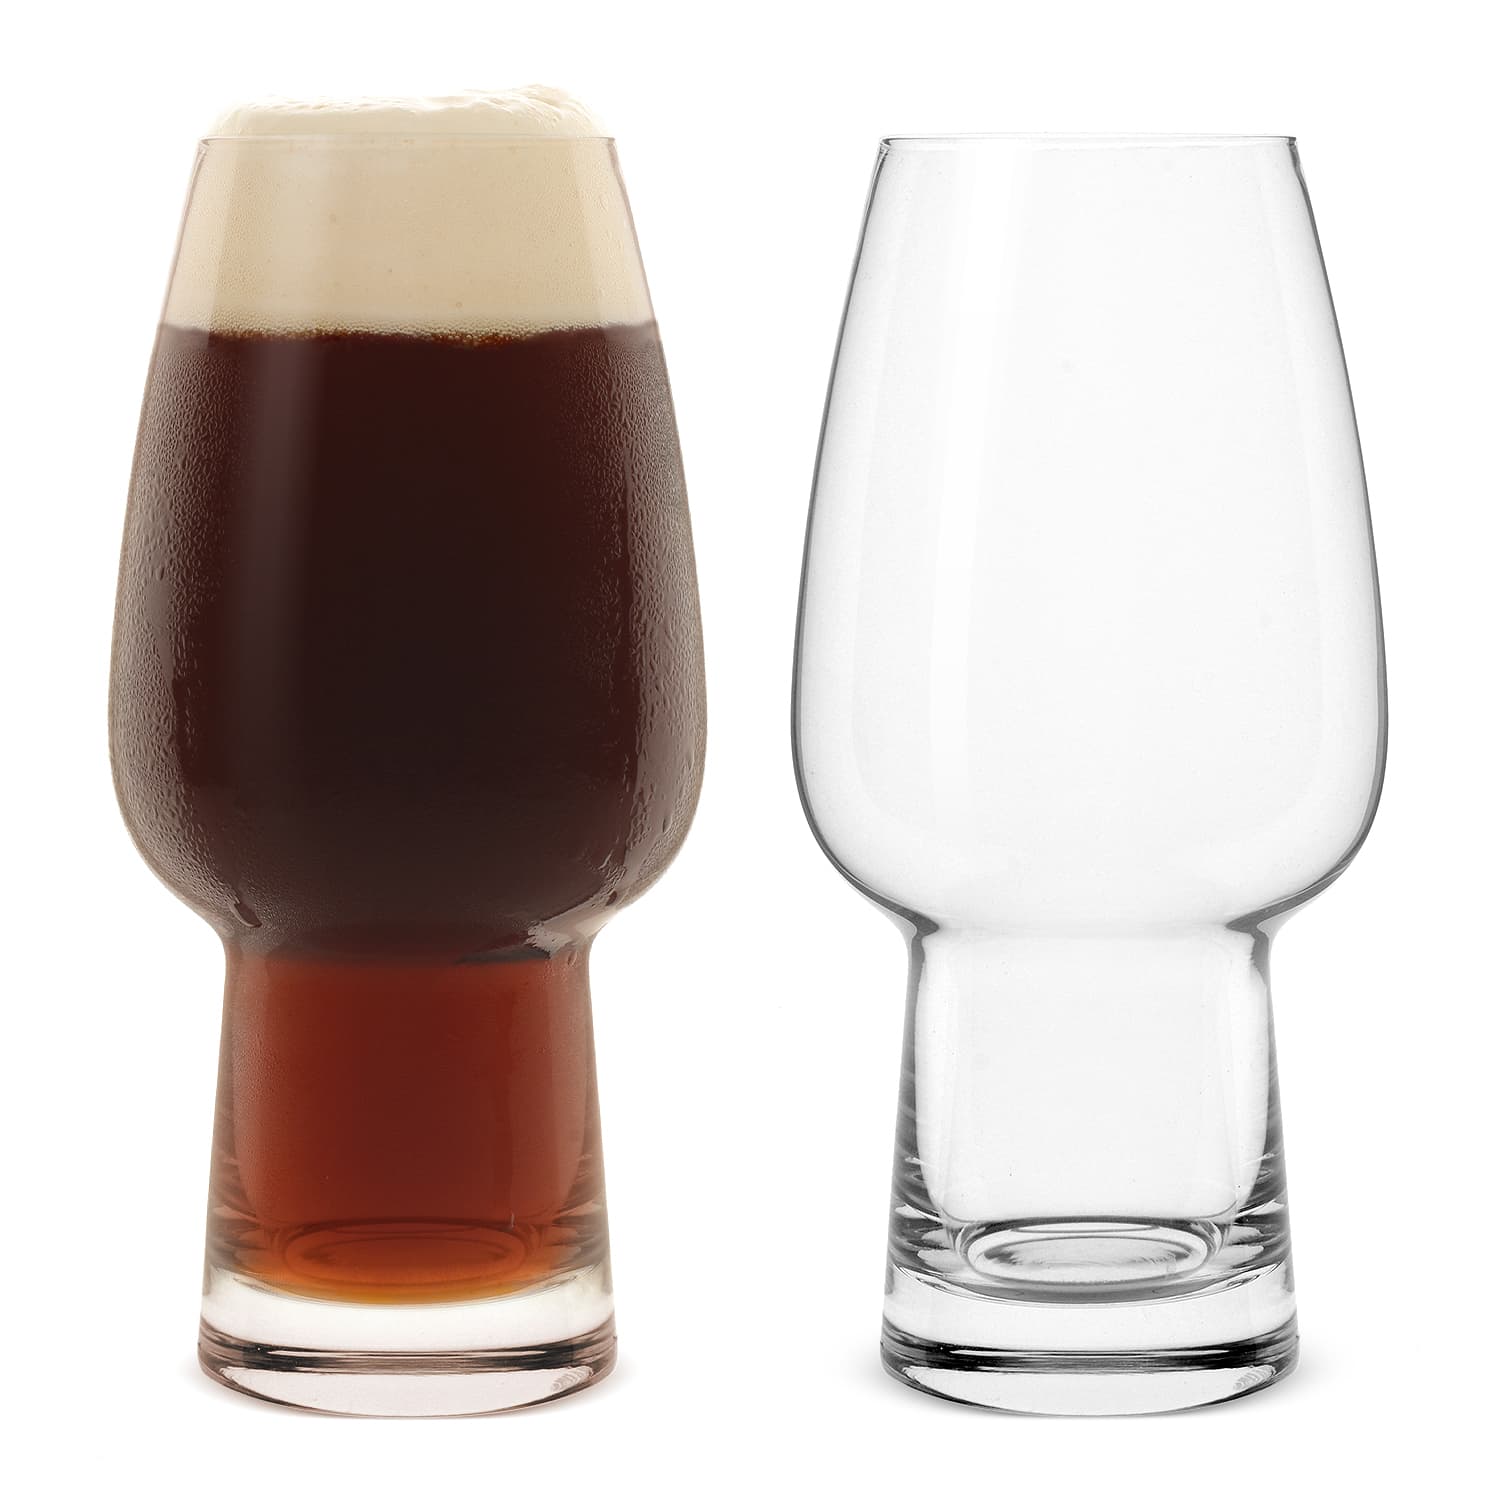 Dartington Best Brew Beer Glasses (500ml) (Set of 2) Gift Set